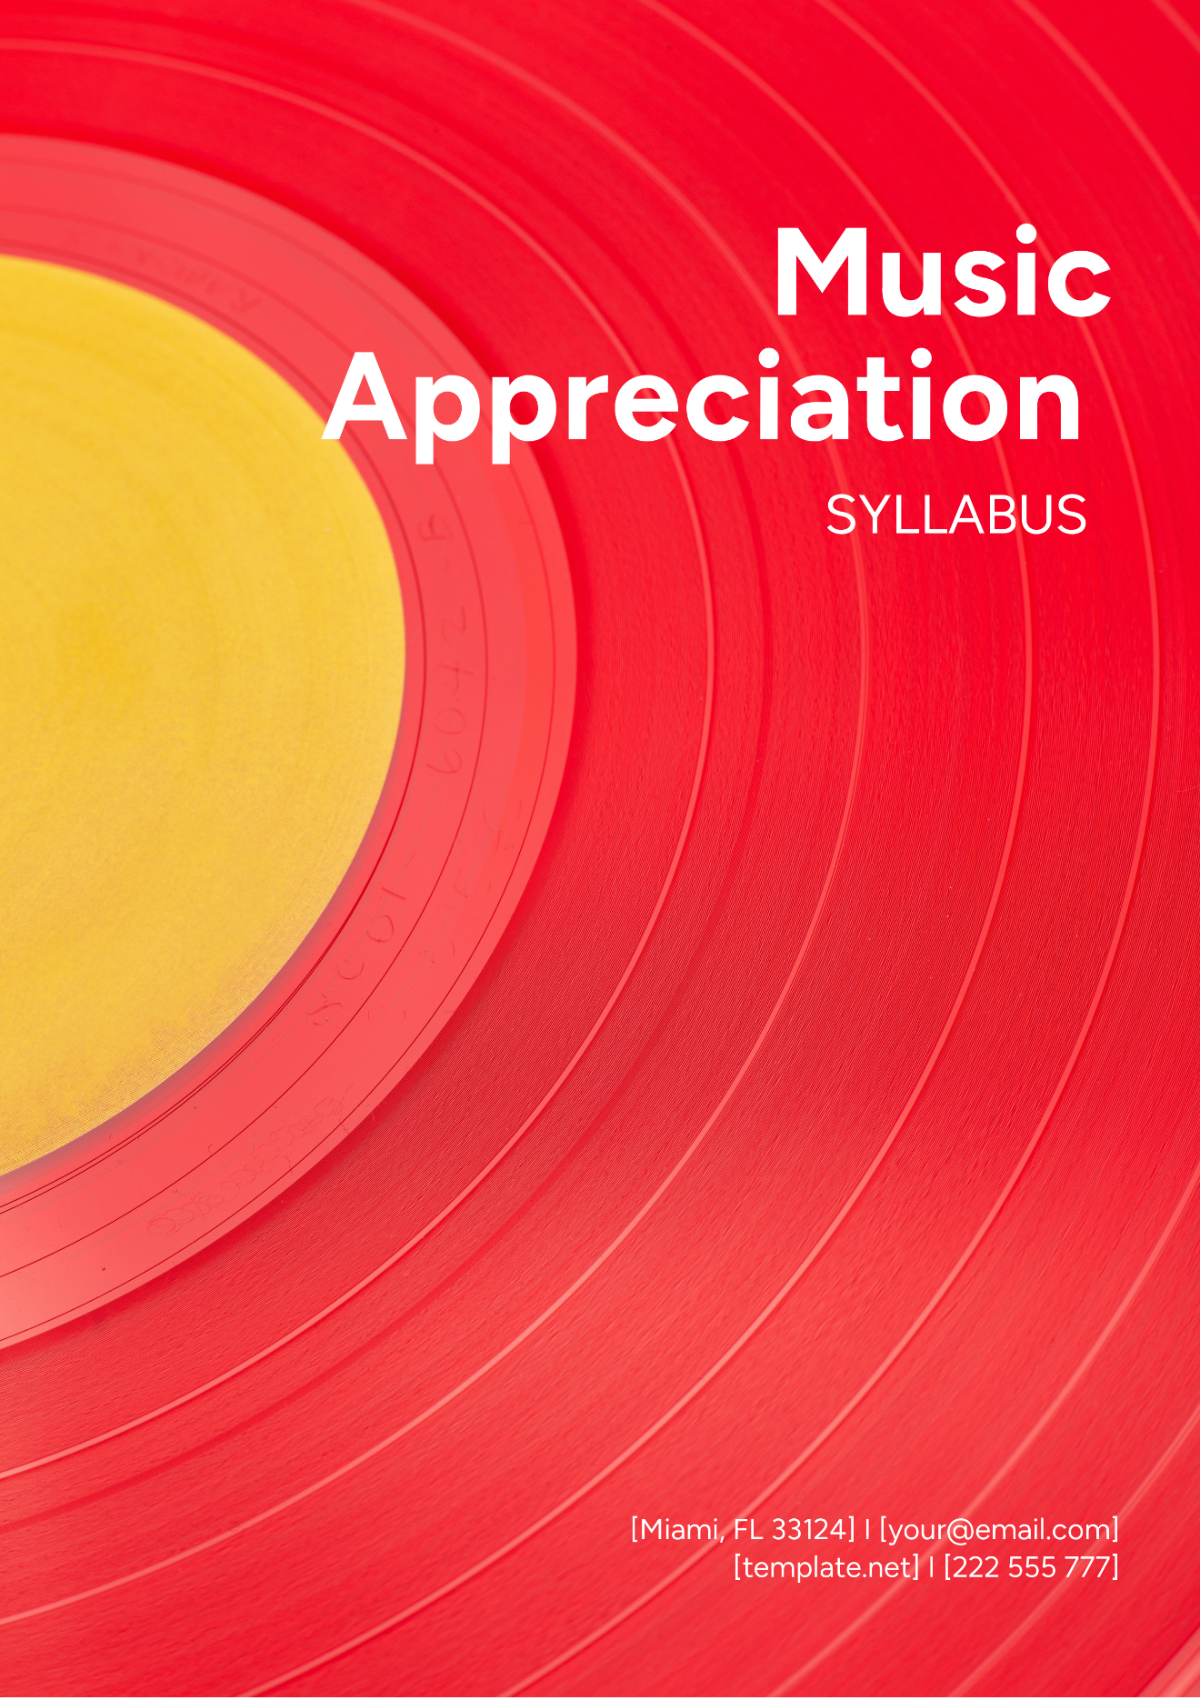 Music Appreciation Syllabus Template